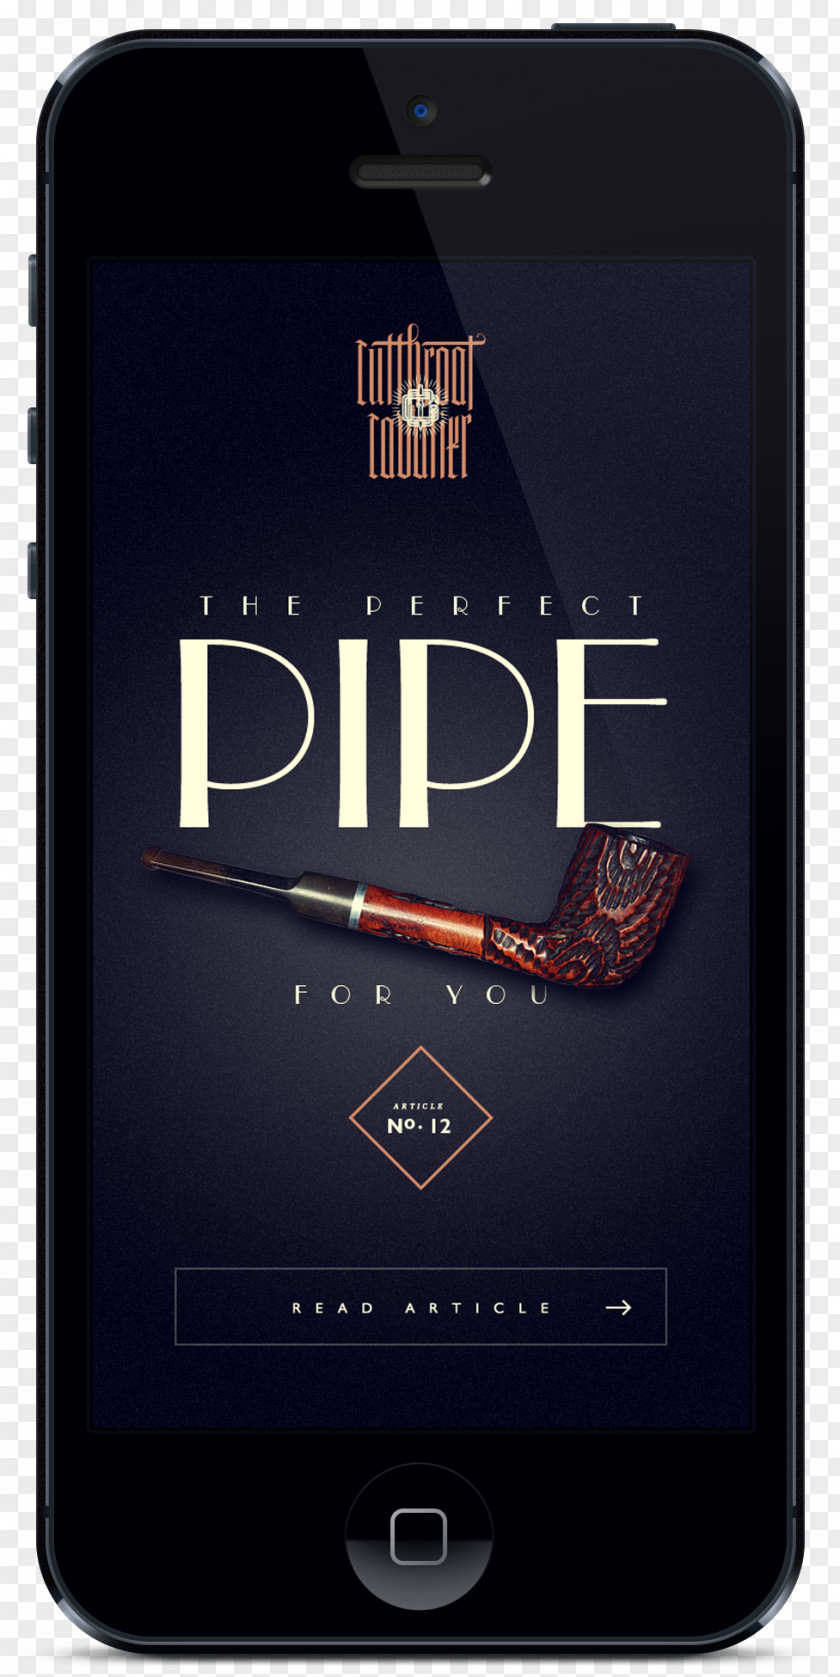 Pipe Feature Phone Smartphone User Interface Design Splash Screen PNG